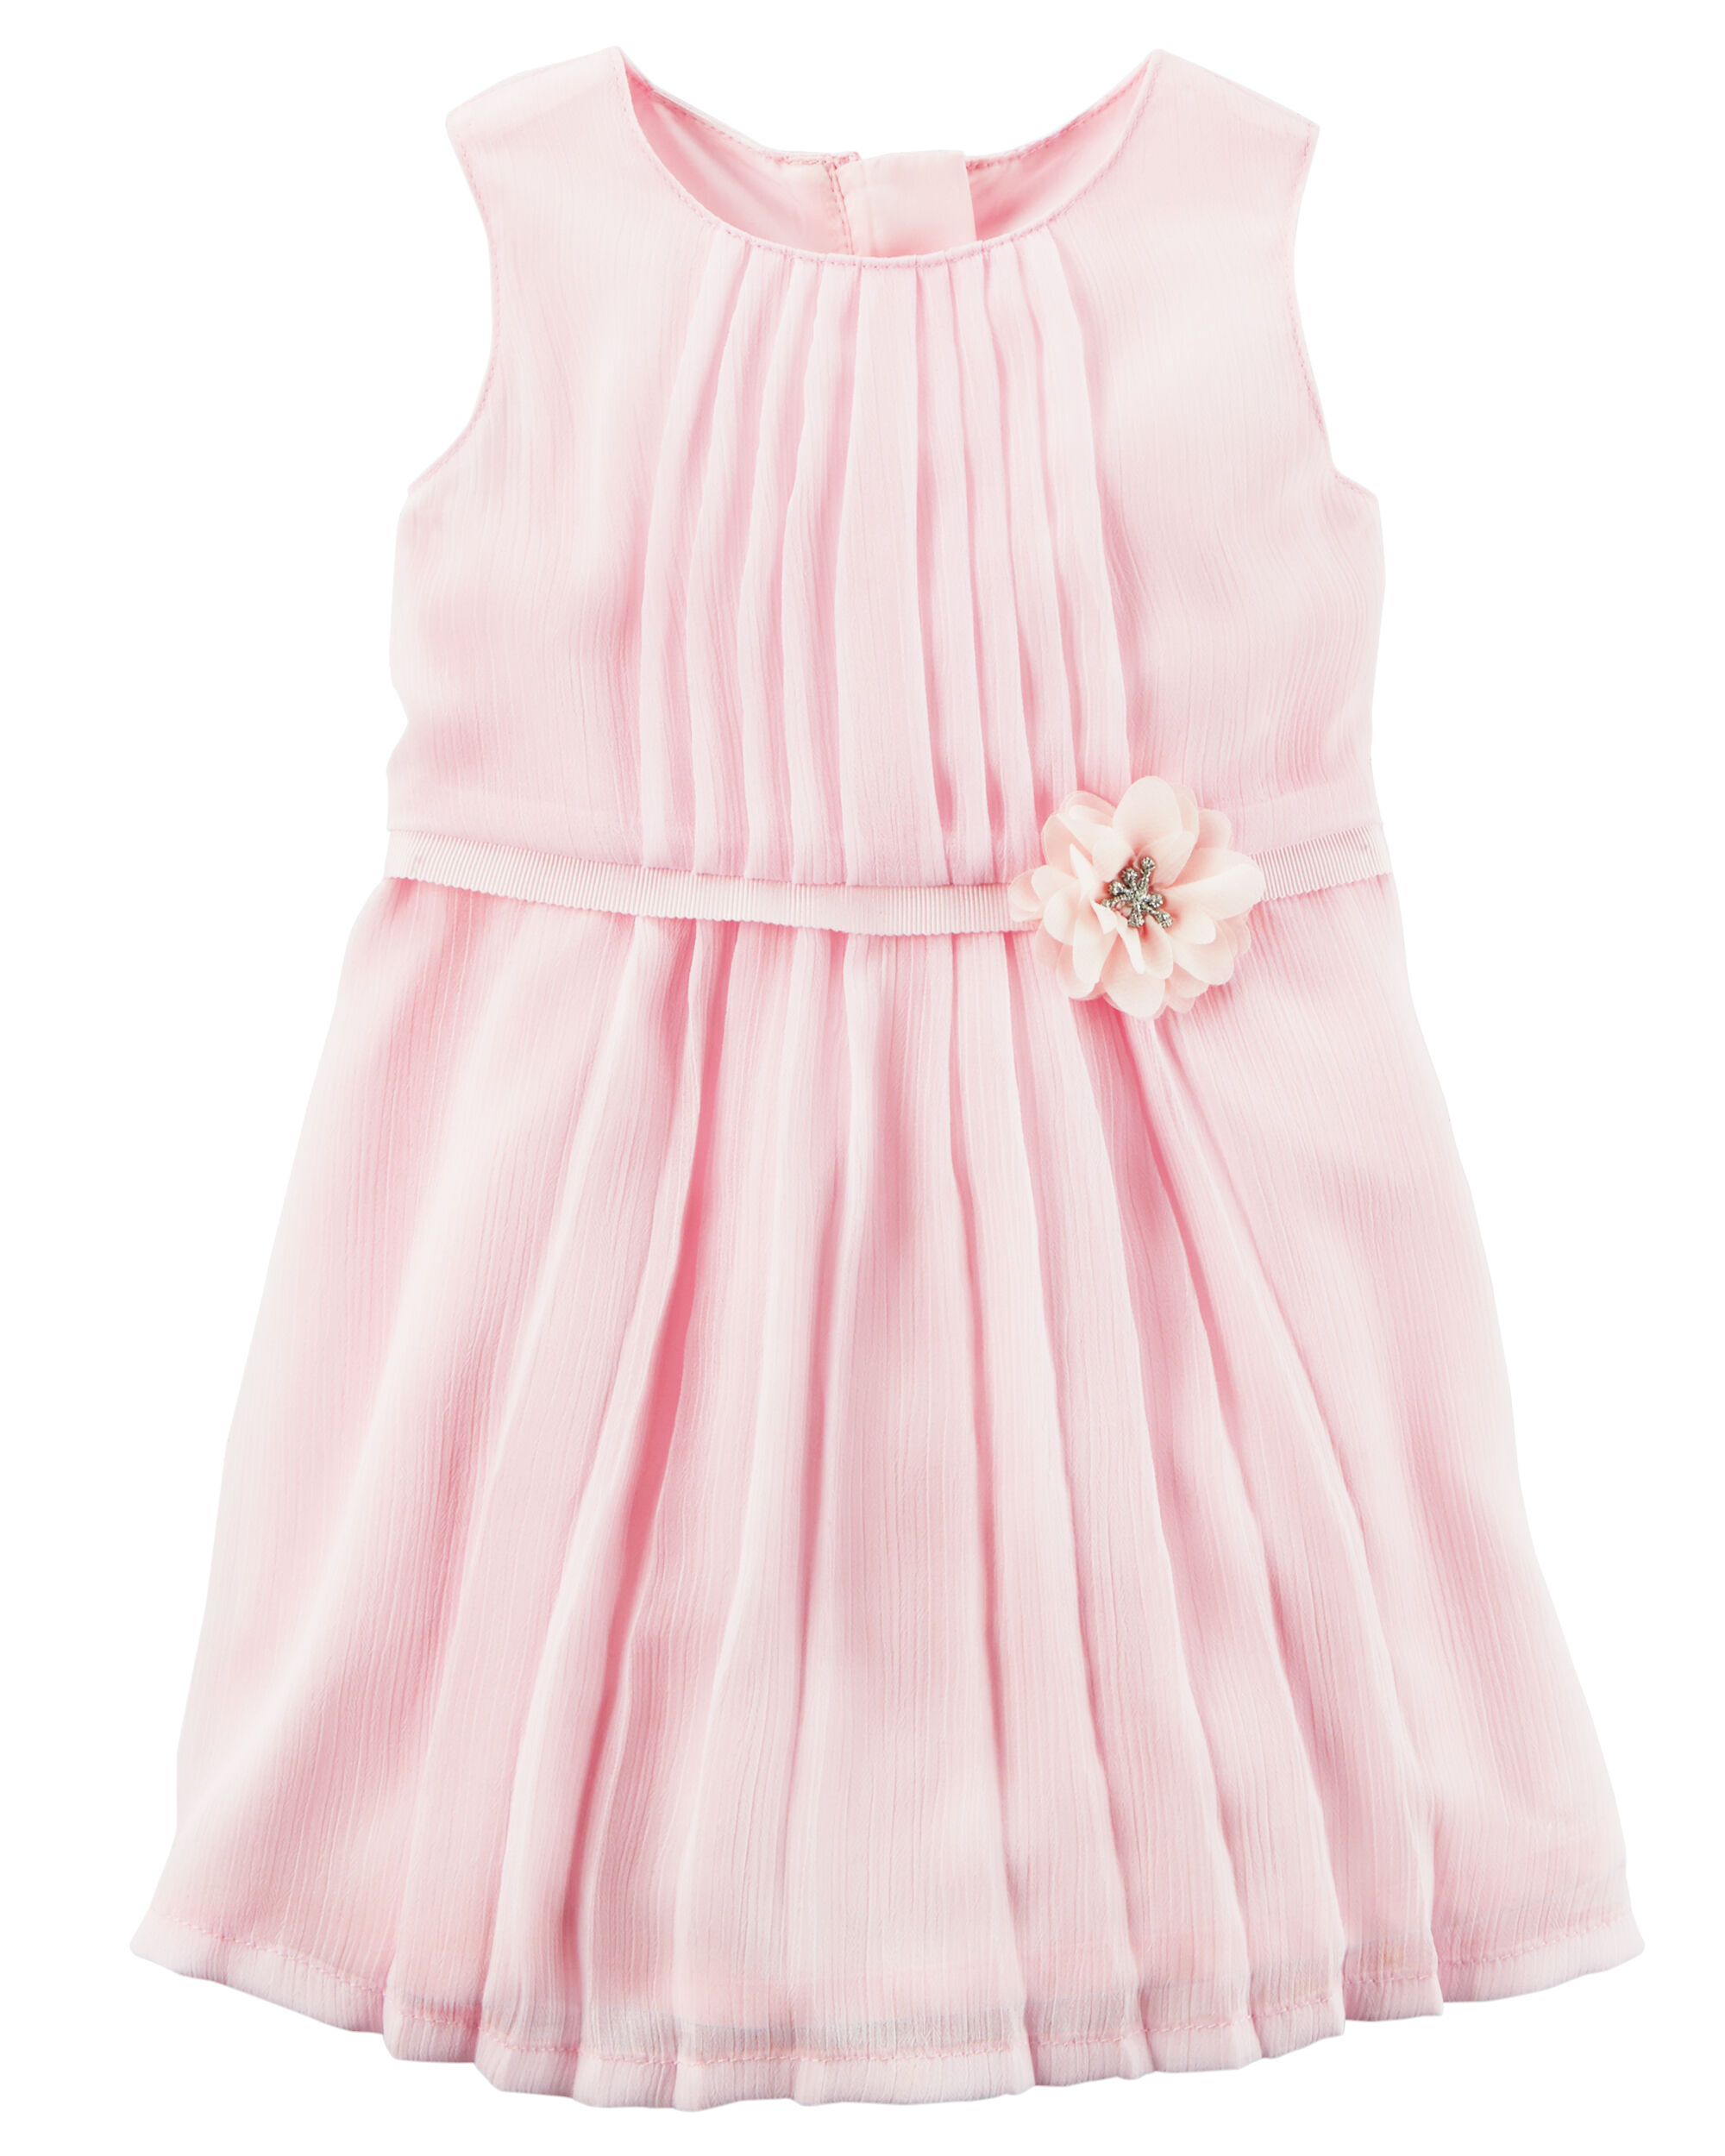 Baby Girl Rosette Chiffon Dress | Carters.com